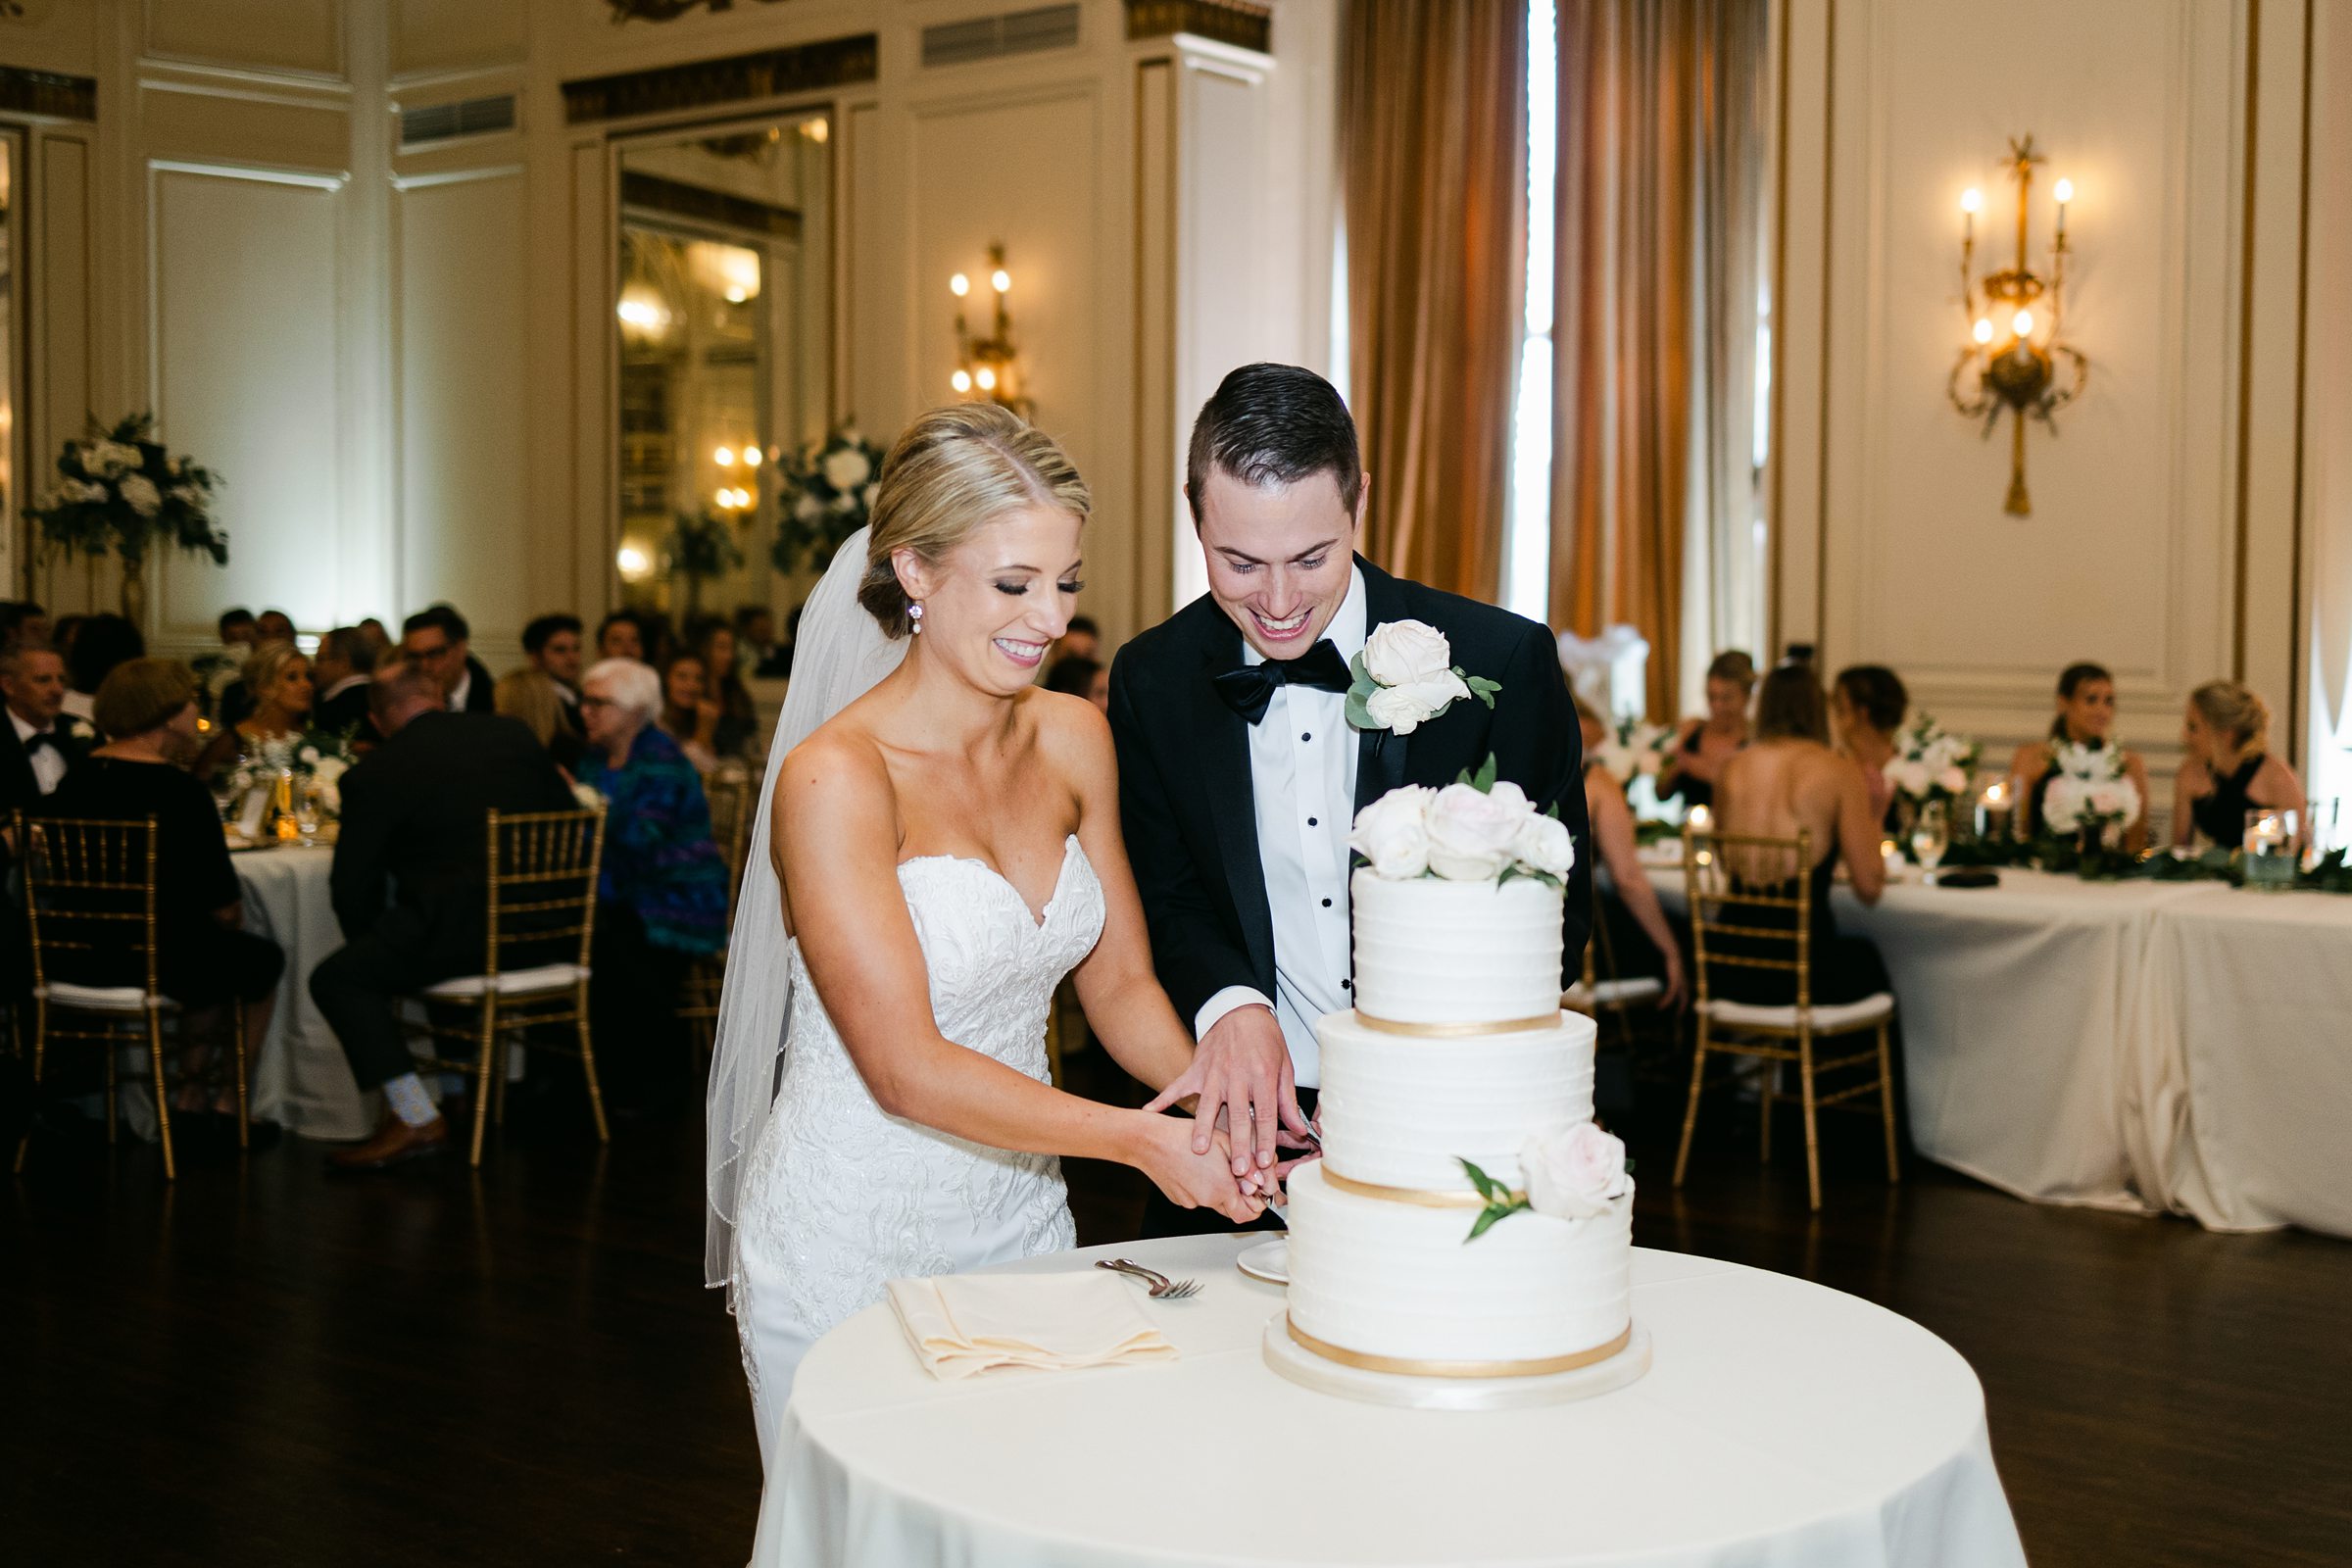 Wedding couple cutting the cake at indoor wedding reception